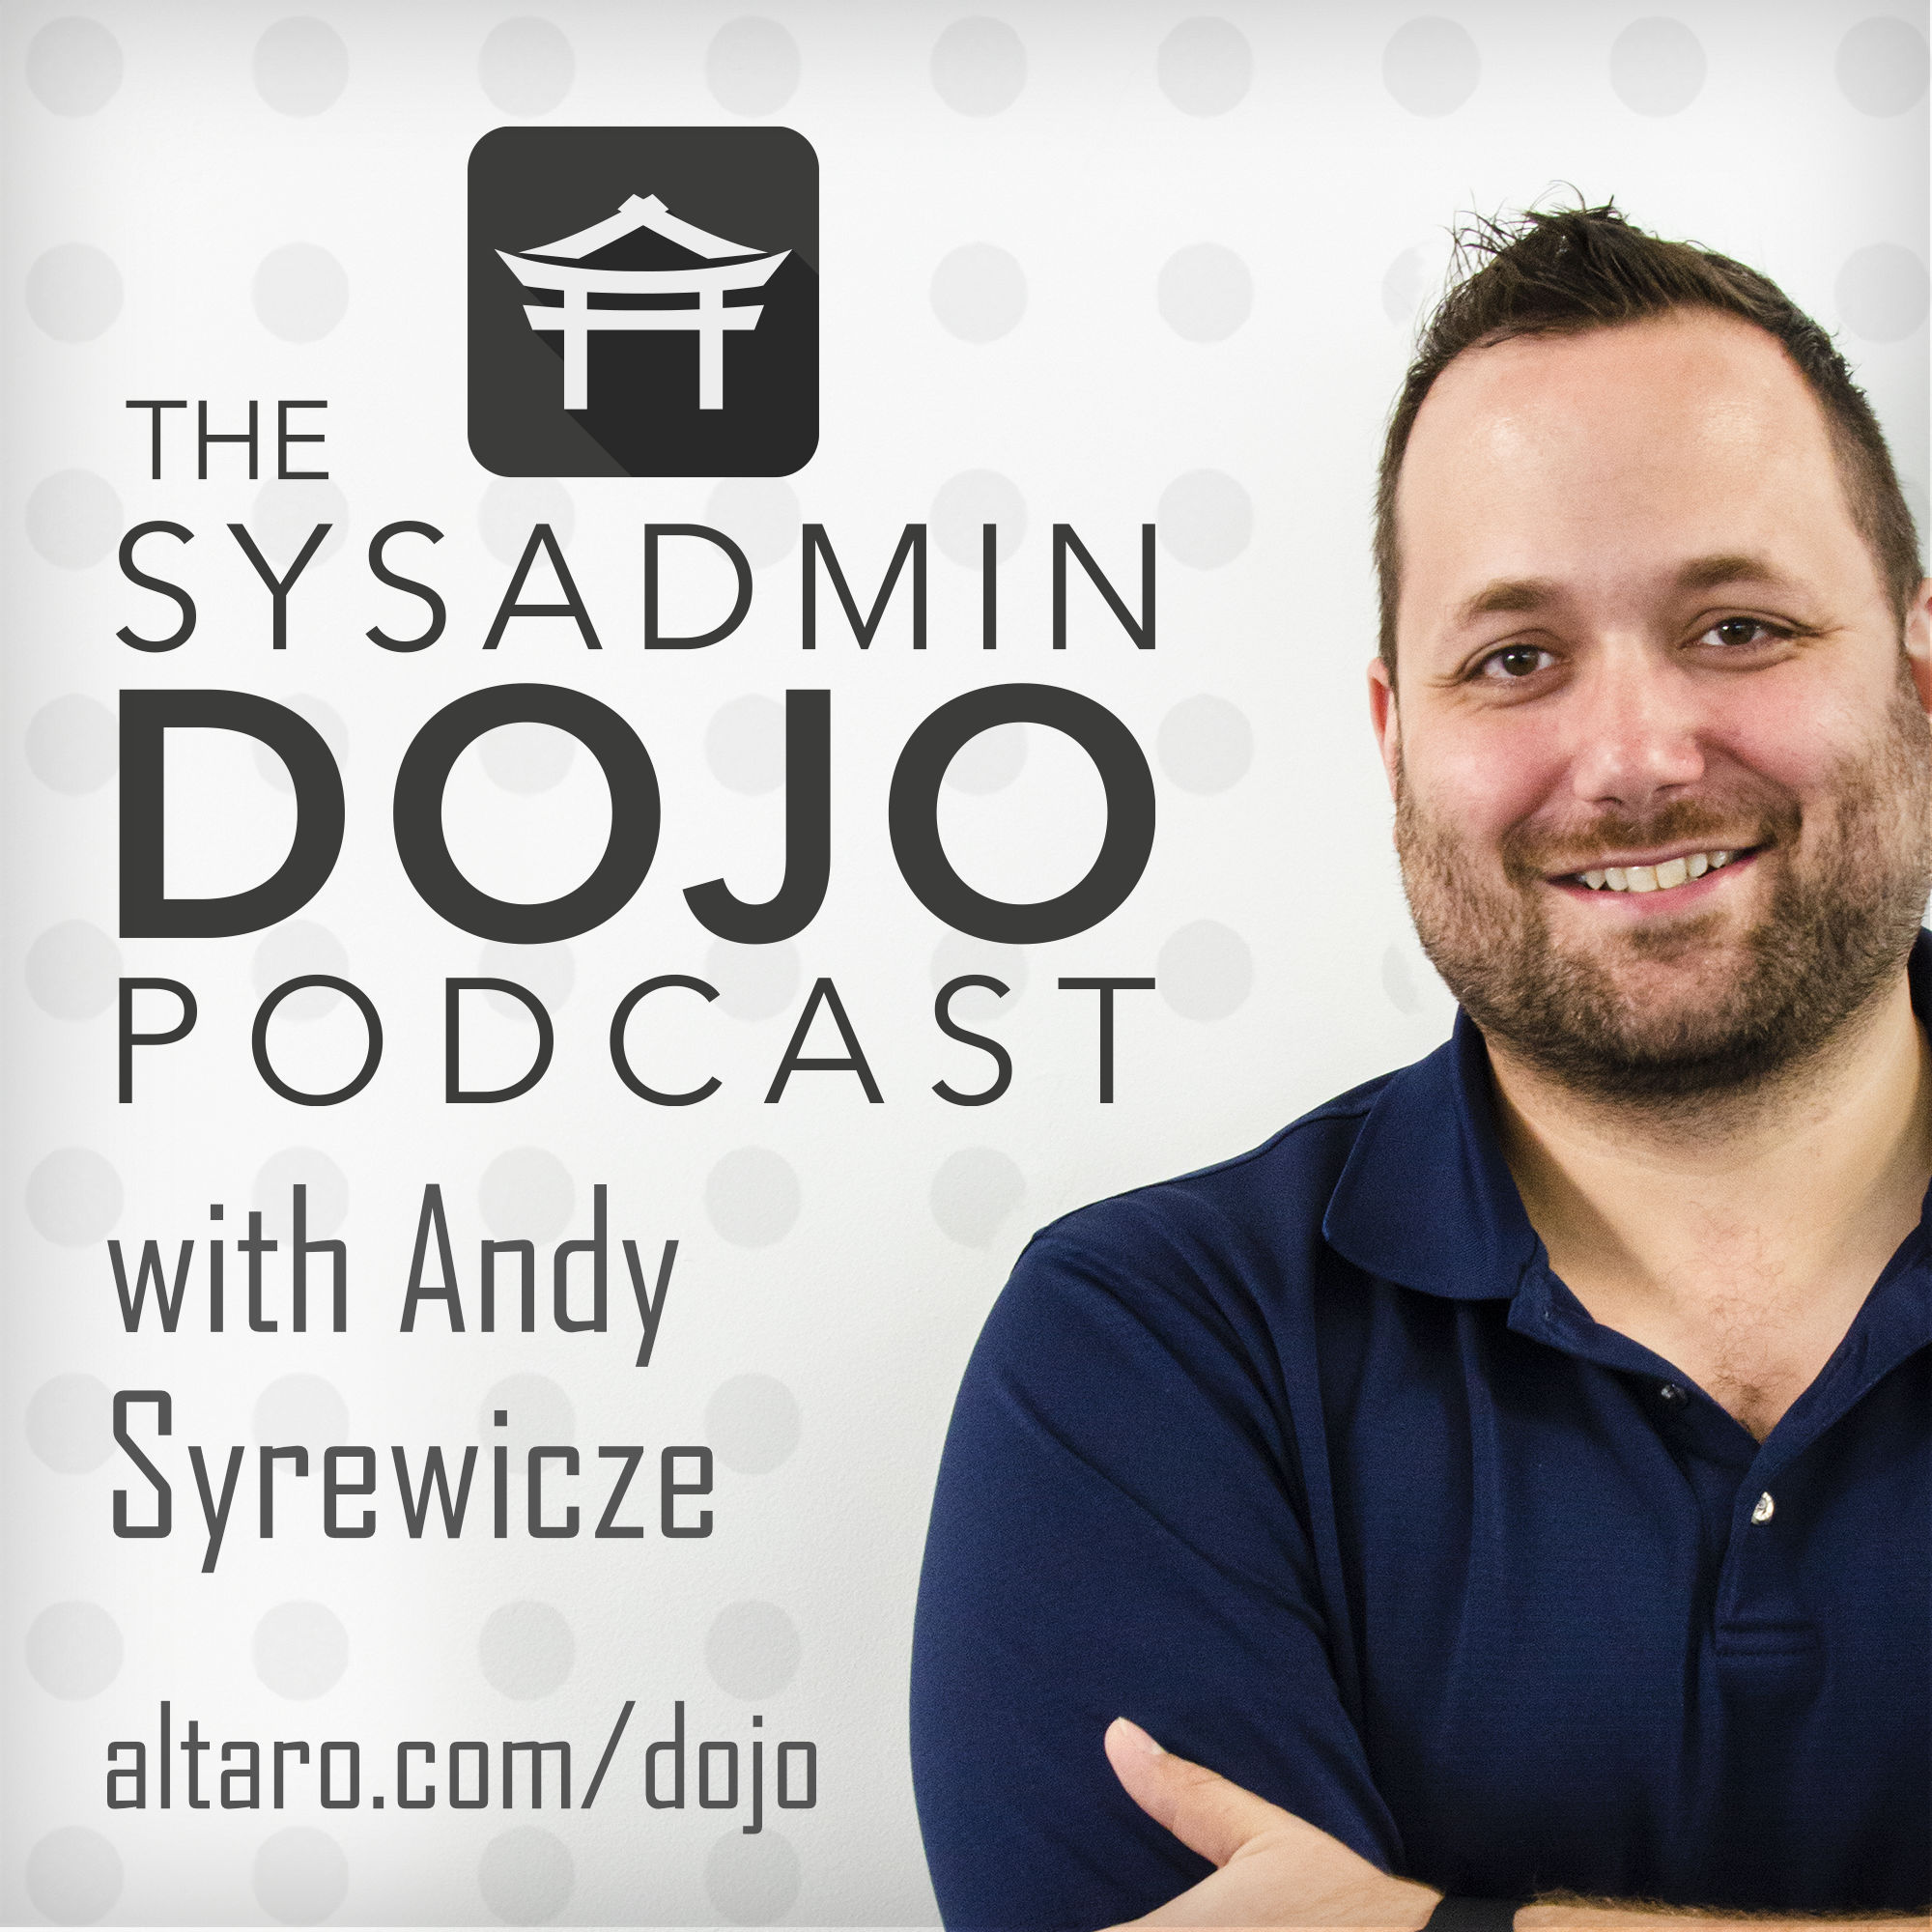 Windows Server Certification is Back! | The SysAdmin DOJO Podcast